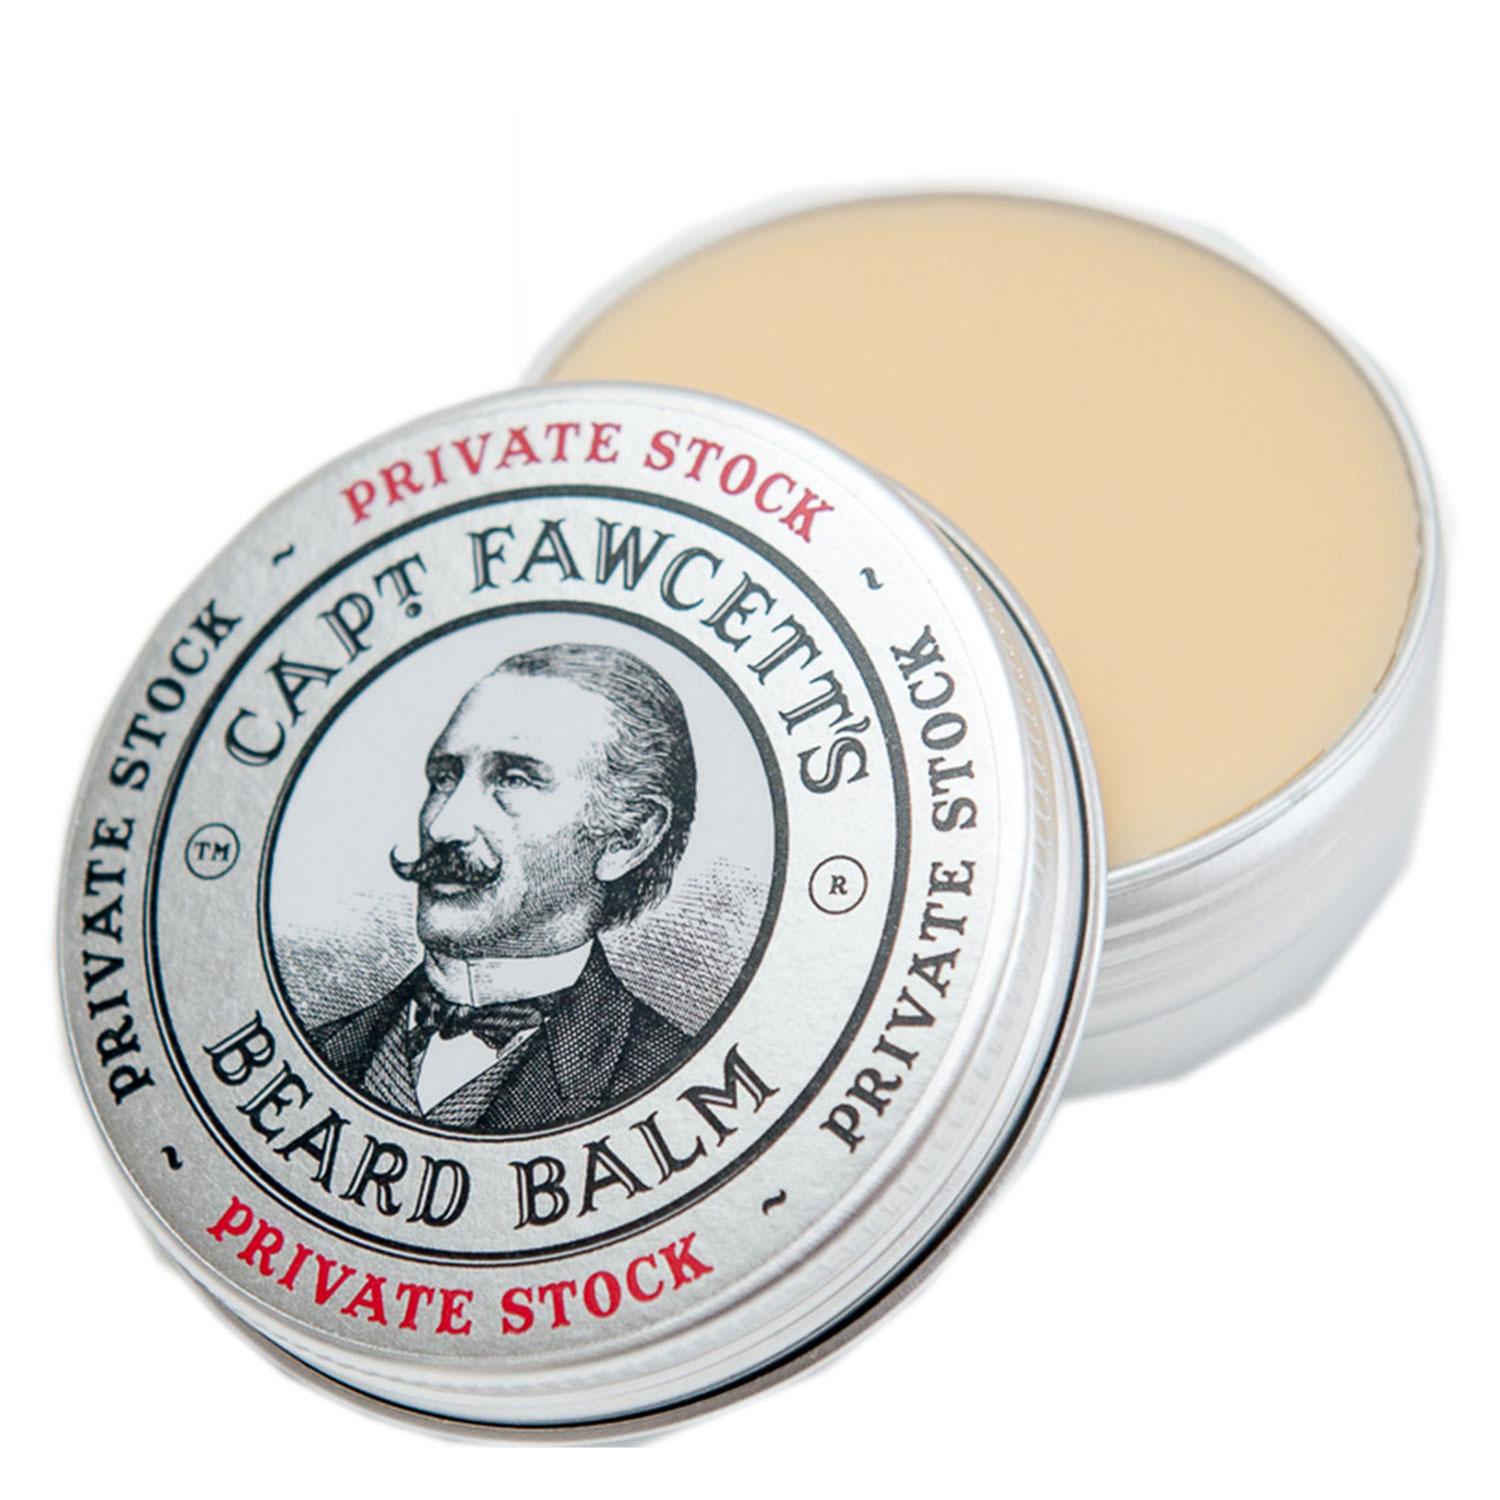 Capt. Fawcett Care - Private Stock Beard Balm